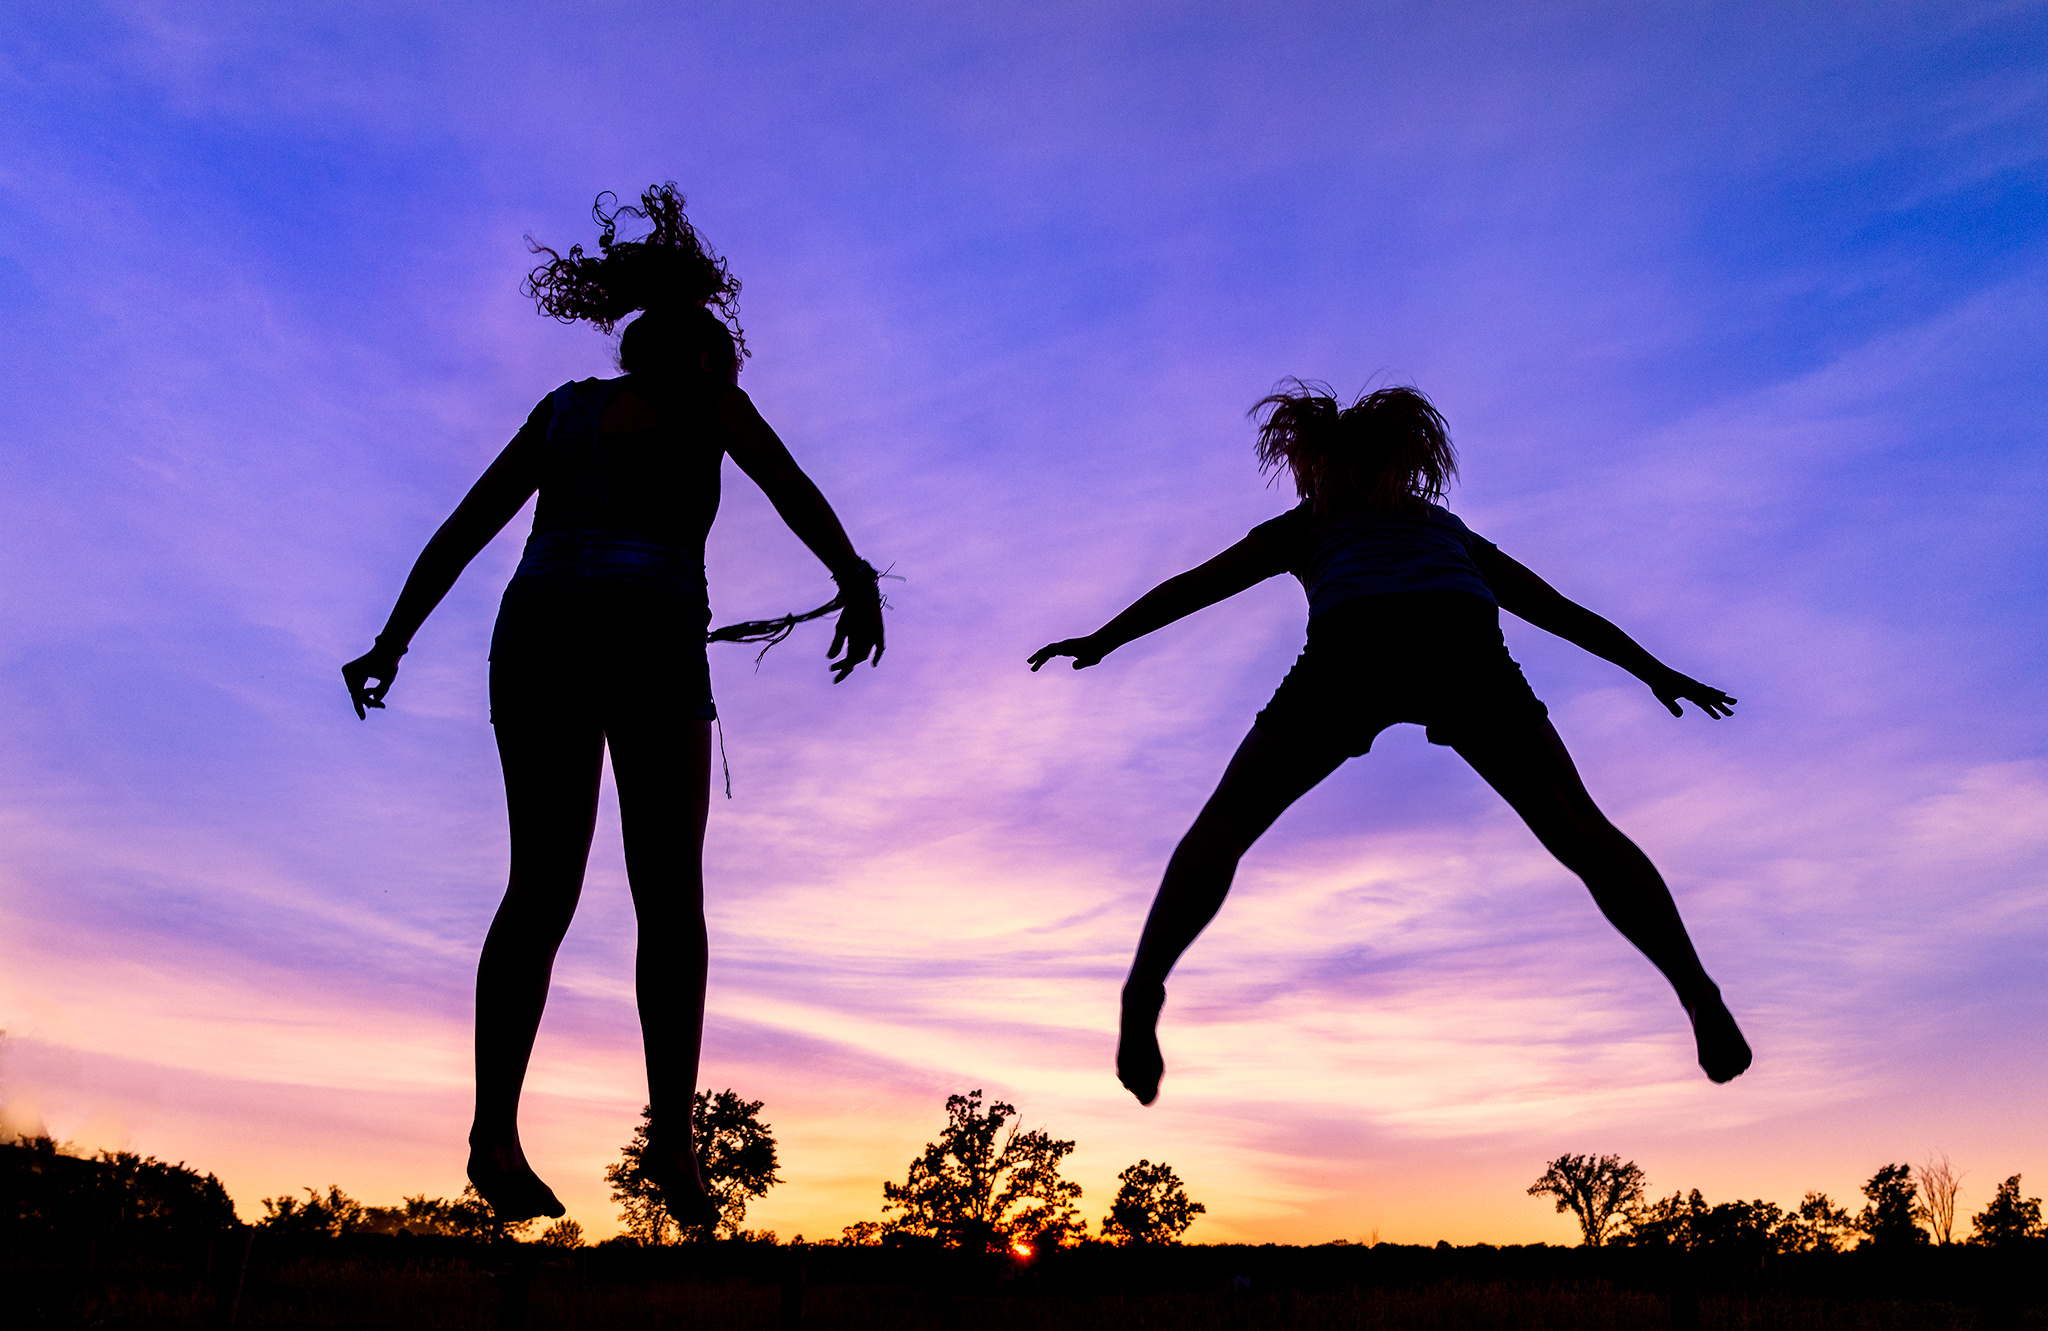 Trampolining: Jumping kids in the sunset, Recreational acrobatics sport discipline. 2050x1340 HD Wallpaper.